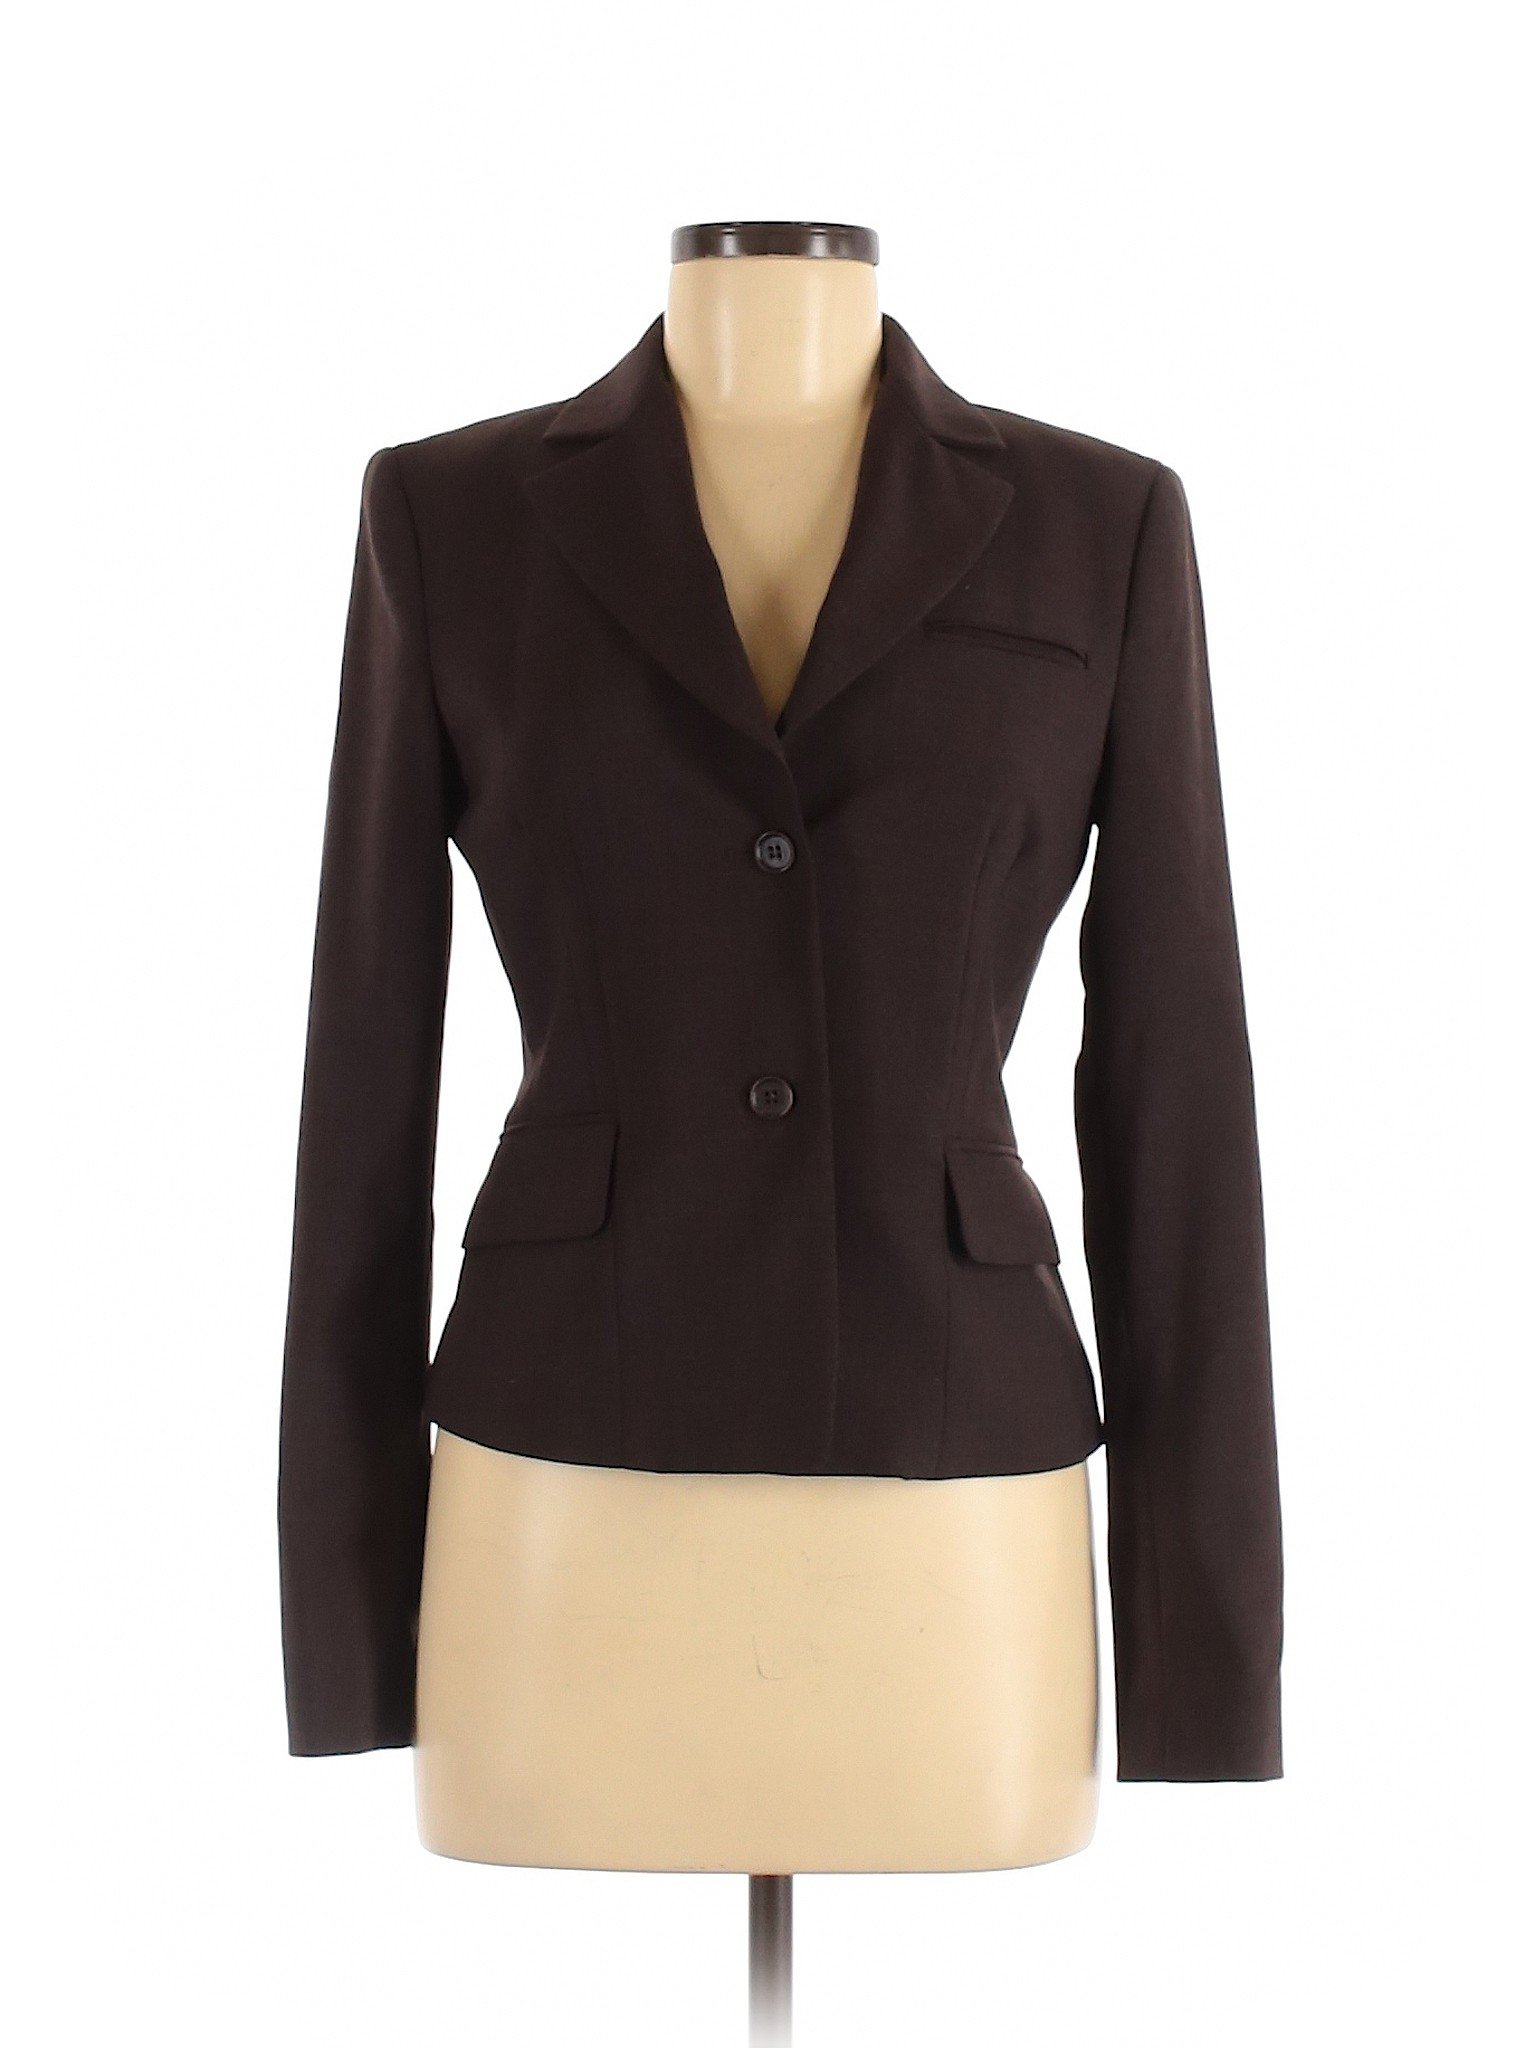 BCBGMAXAZRIA Women Brown Wool Blazer S | eBay